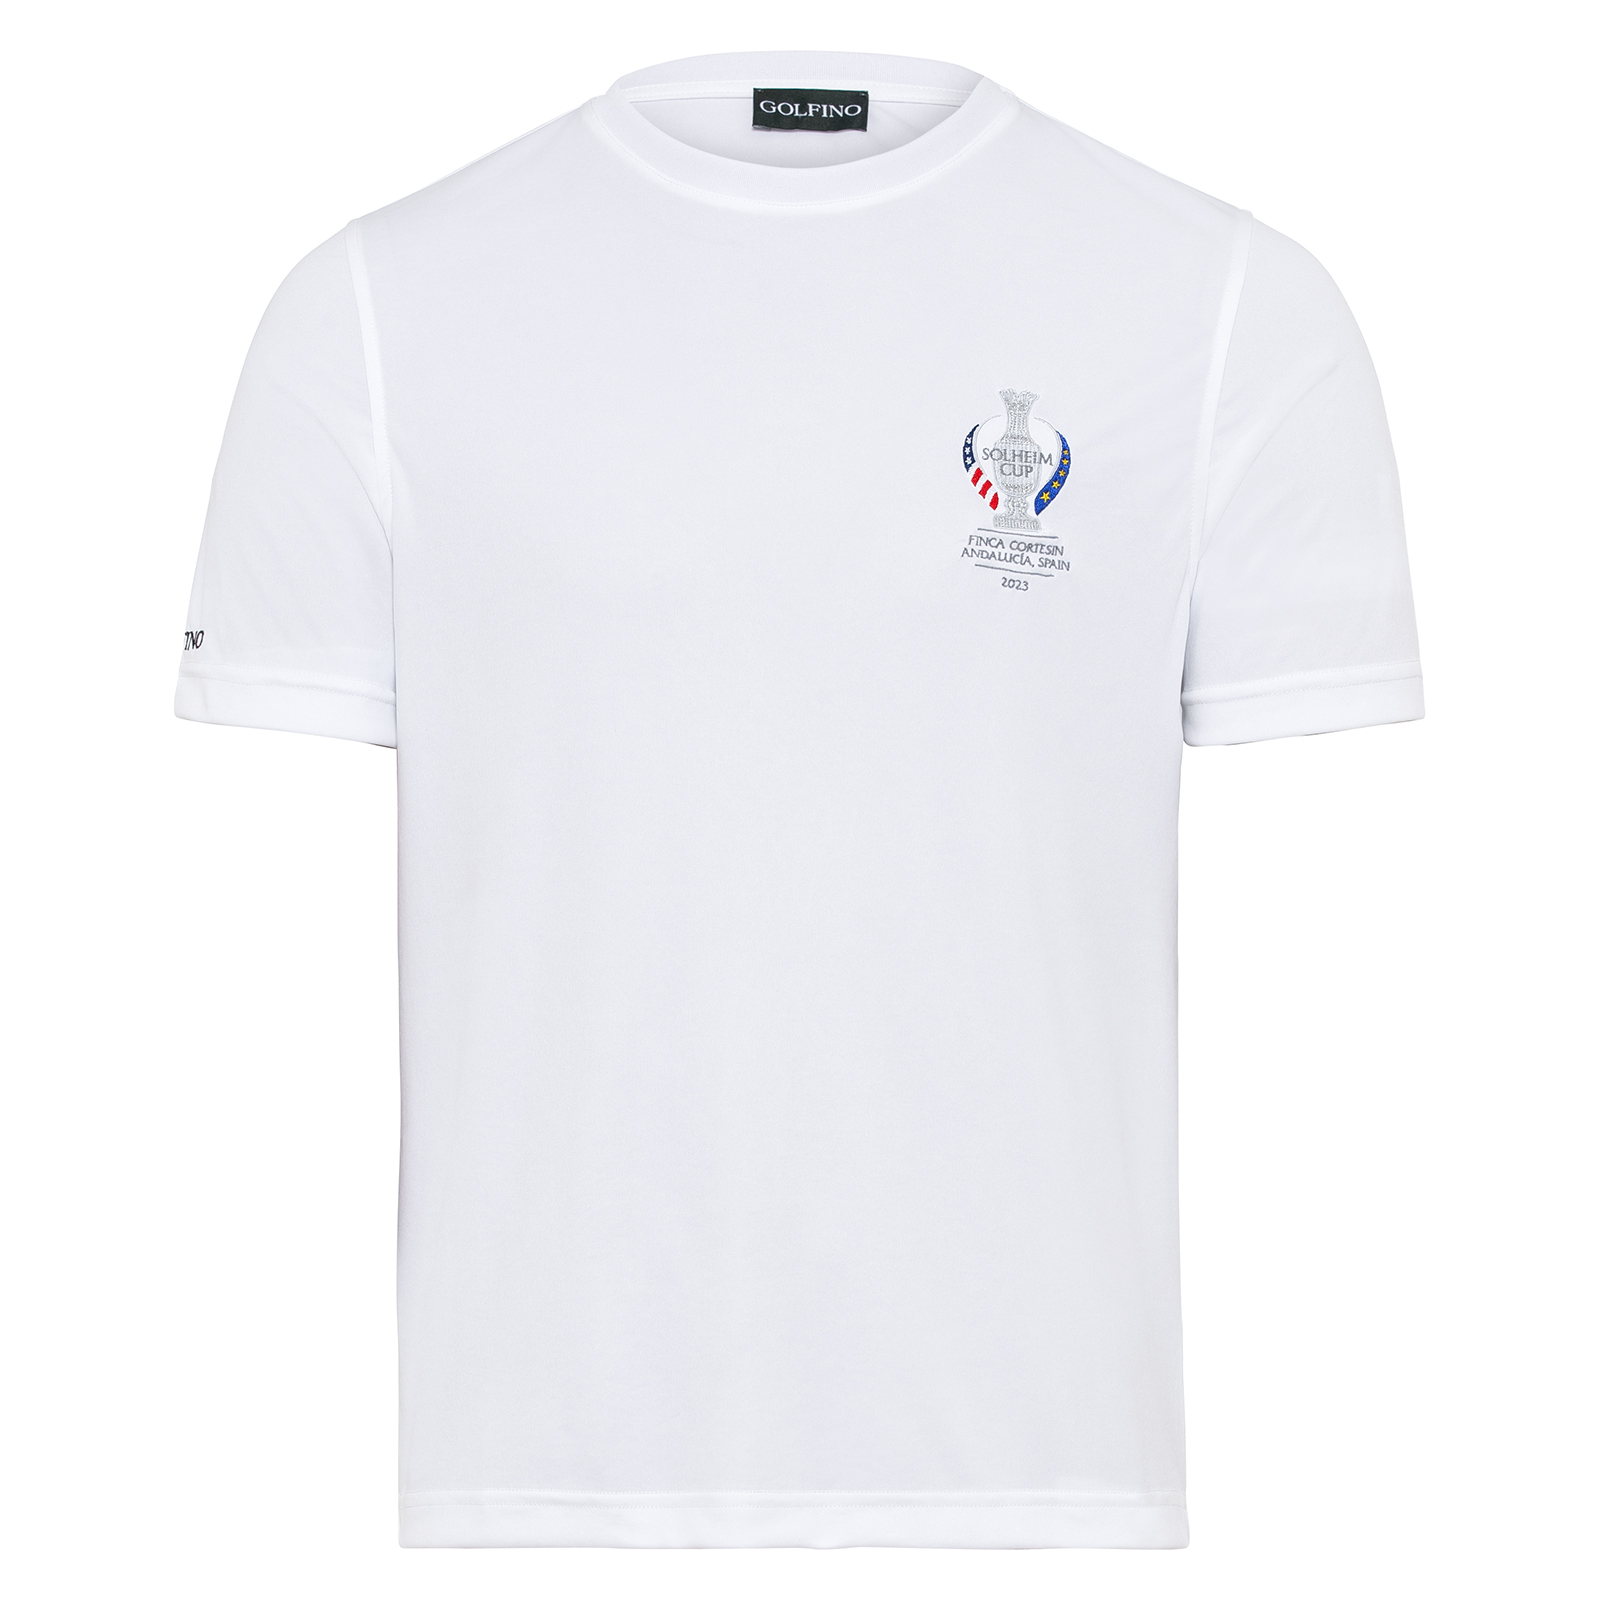 Zacht golf-T-shirt met uv-bescherming in Solheim Cup-design 